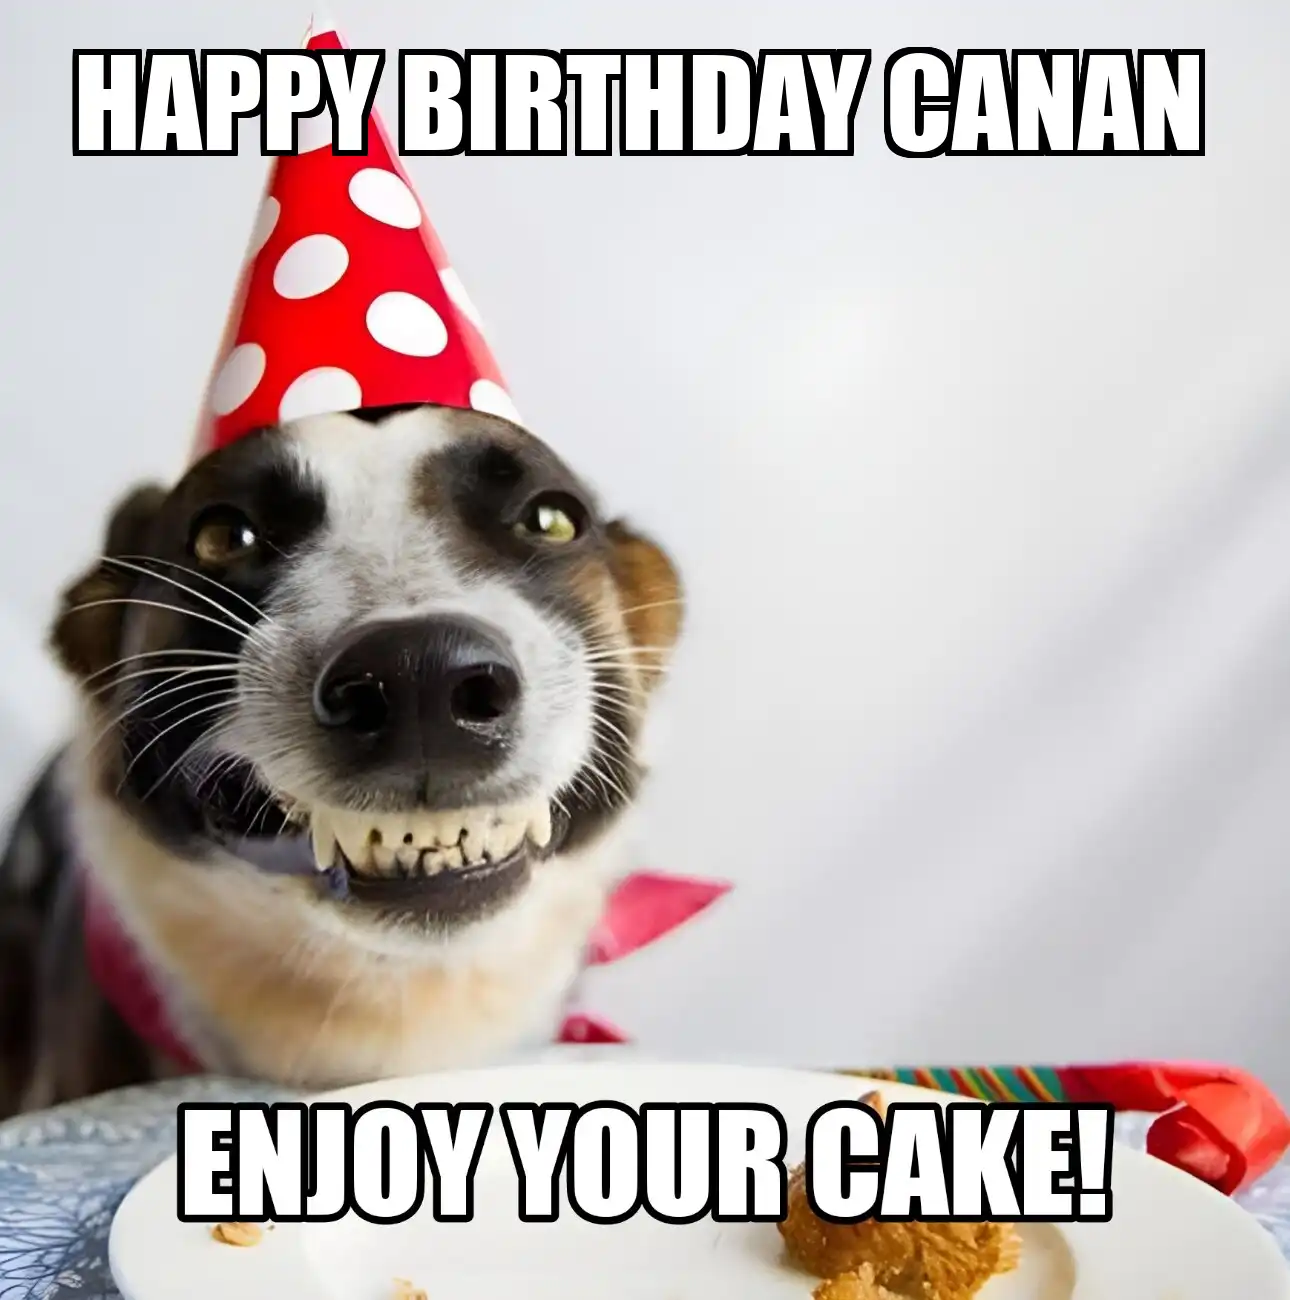 Happy Birthday Canan Enjoy Your Cake Dog Meme